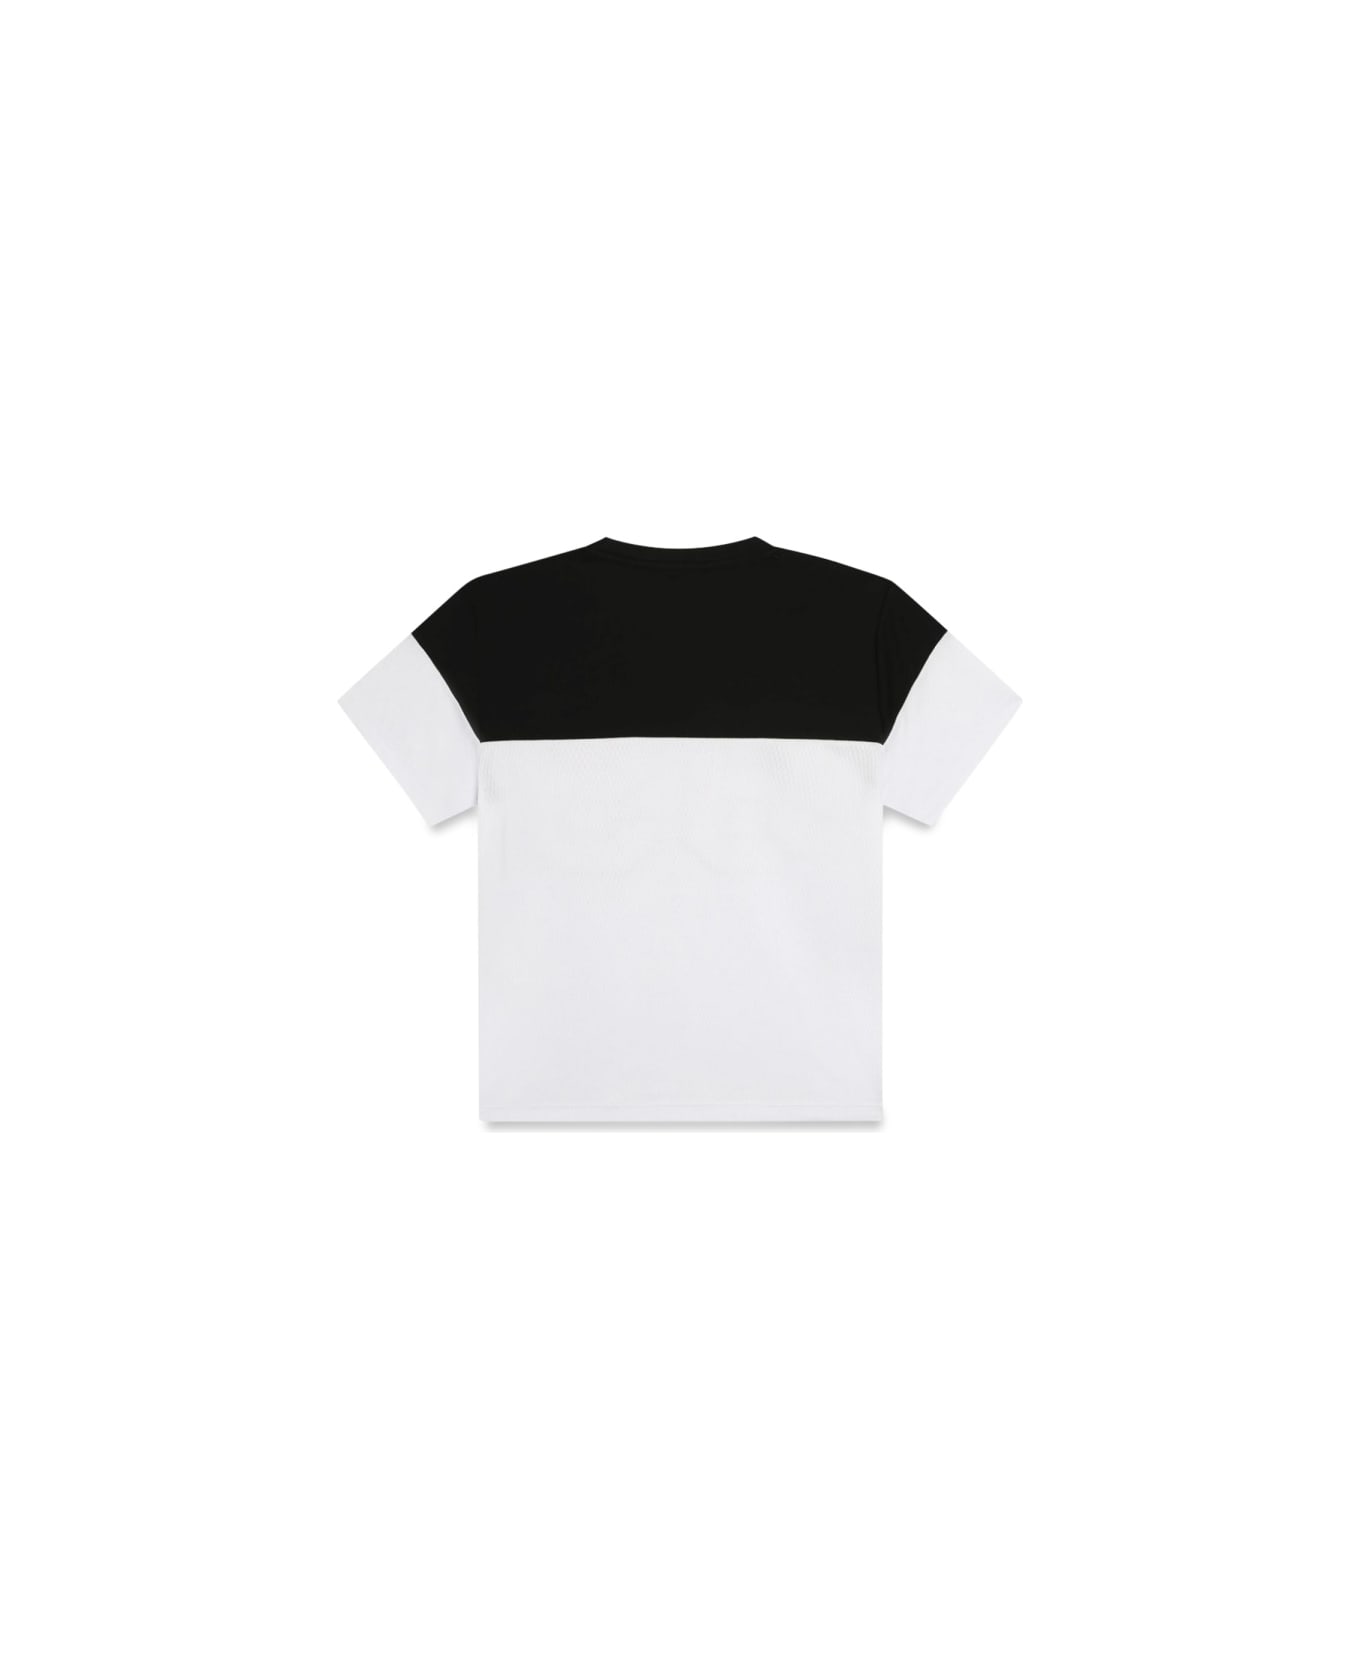 DKNY Tee Shirt - WHITE